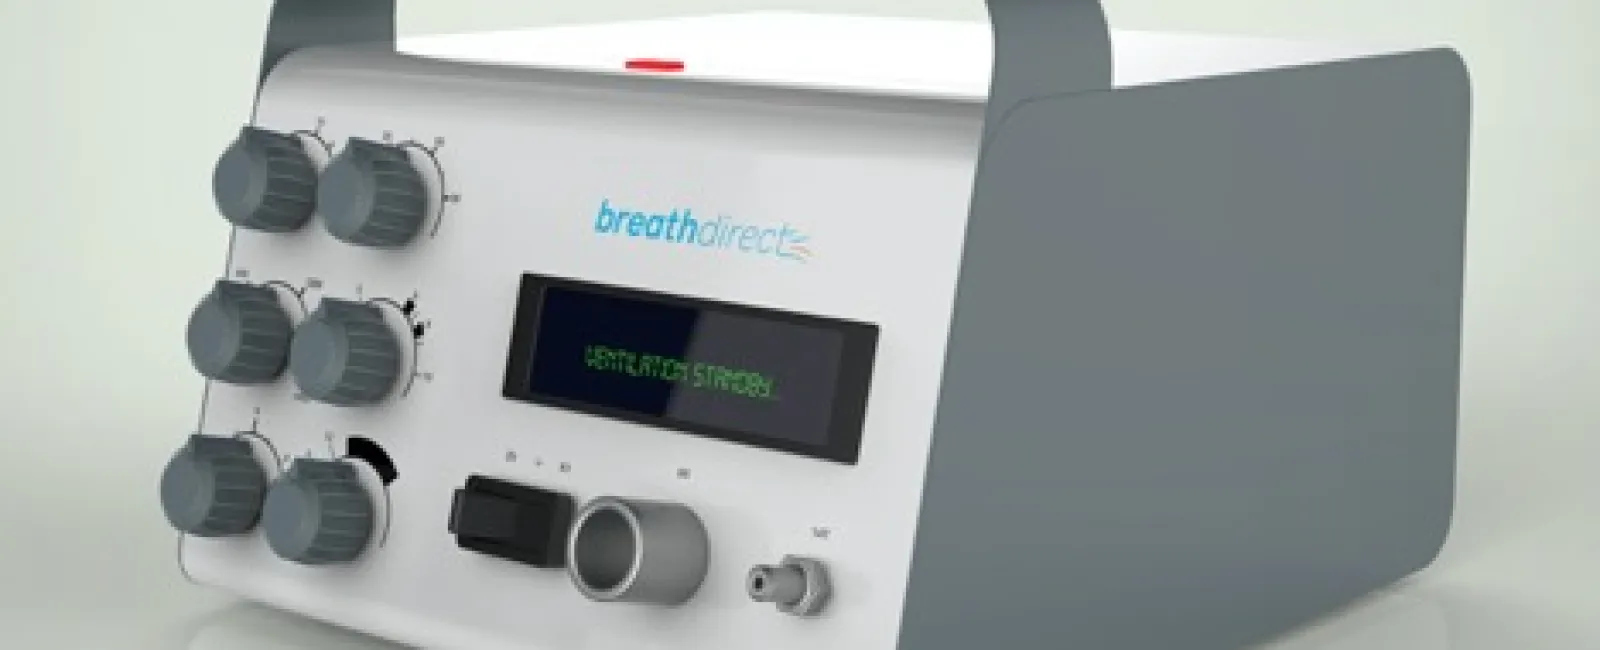 Darren Saravis creates BreathDirect to assist with ventilator shortage